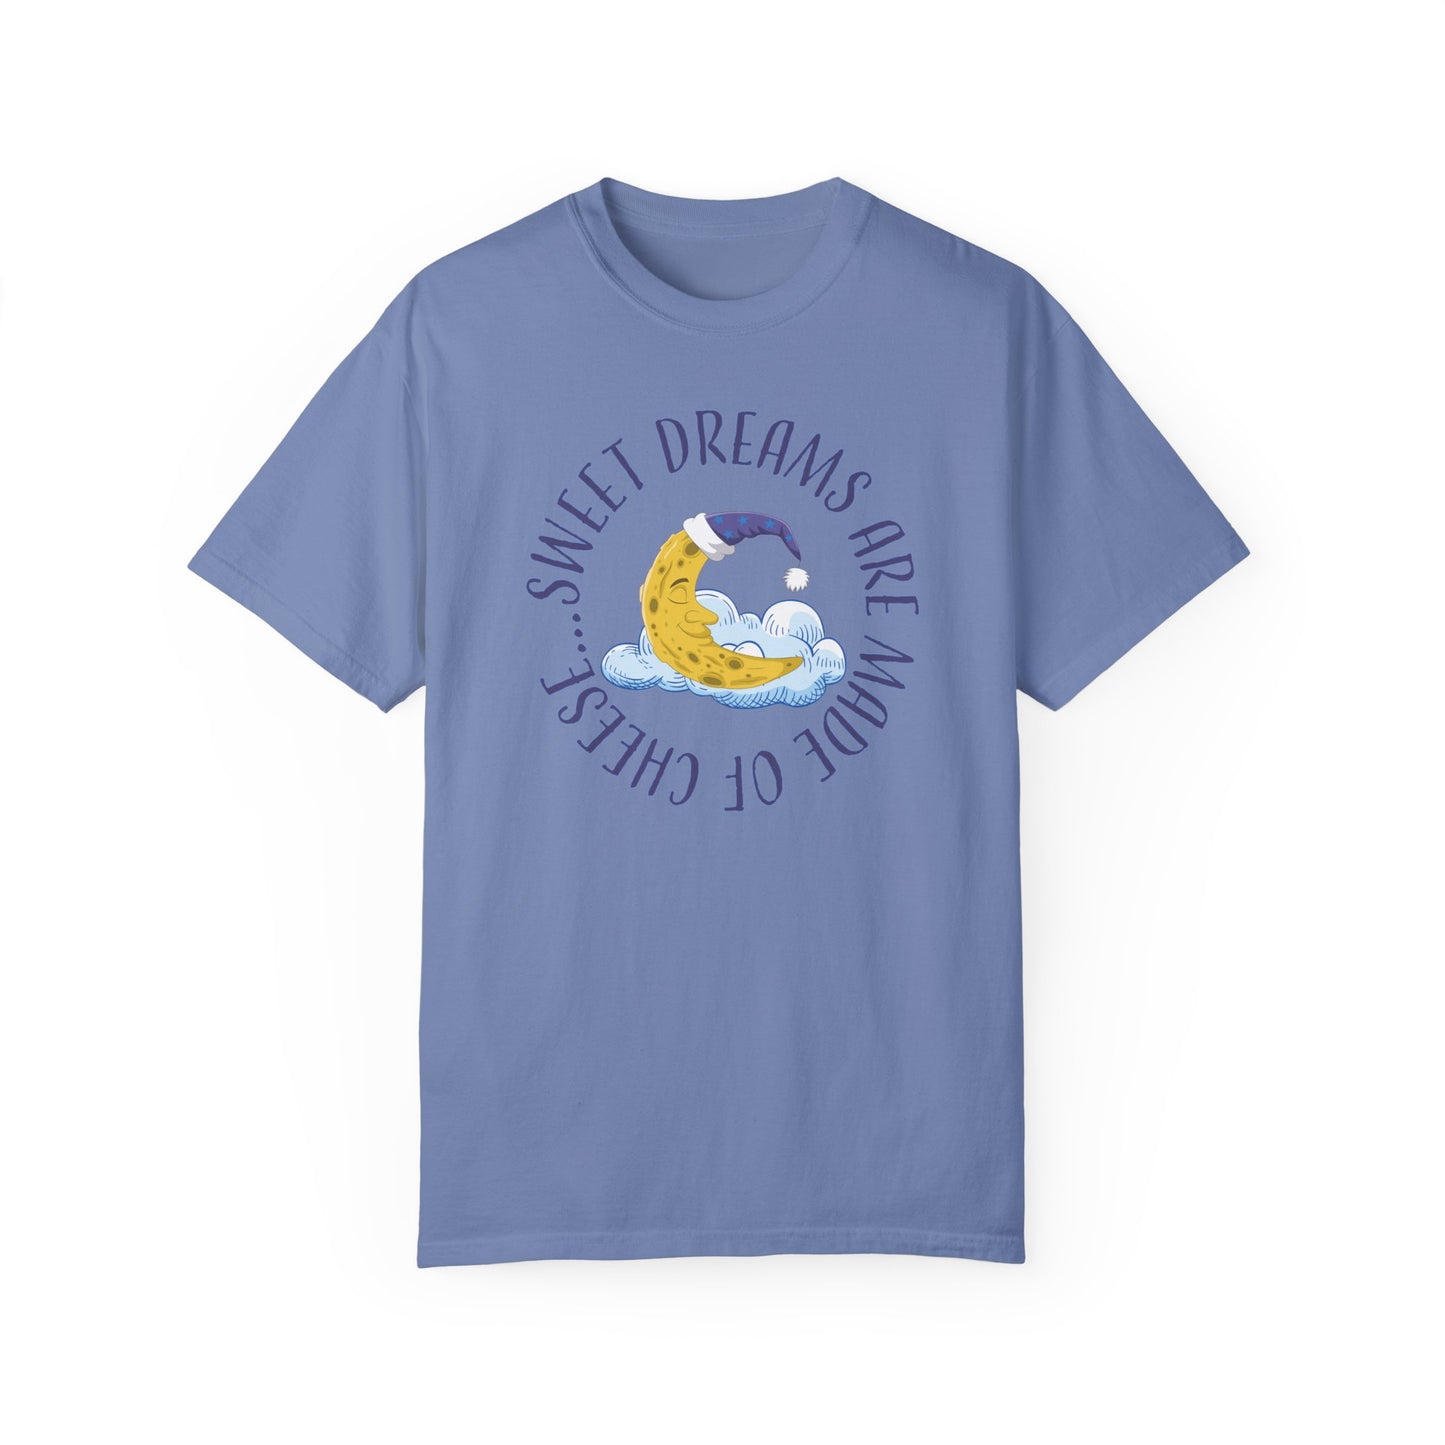 Sweet Dreams T-Shirt For Man In The Moon T Shirt For Lunar Cheese TShirt For Sleep Shirt Gift